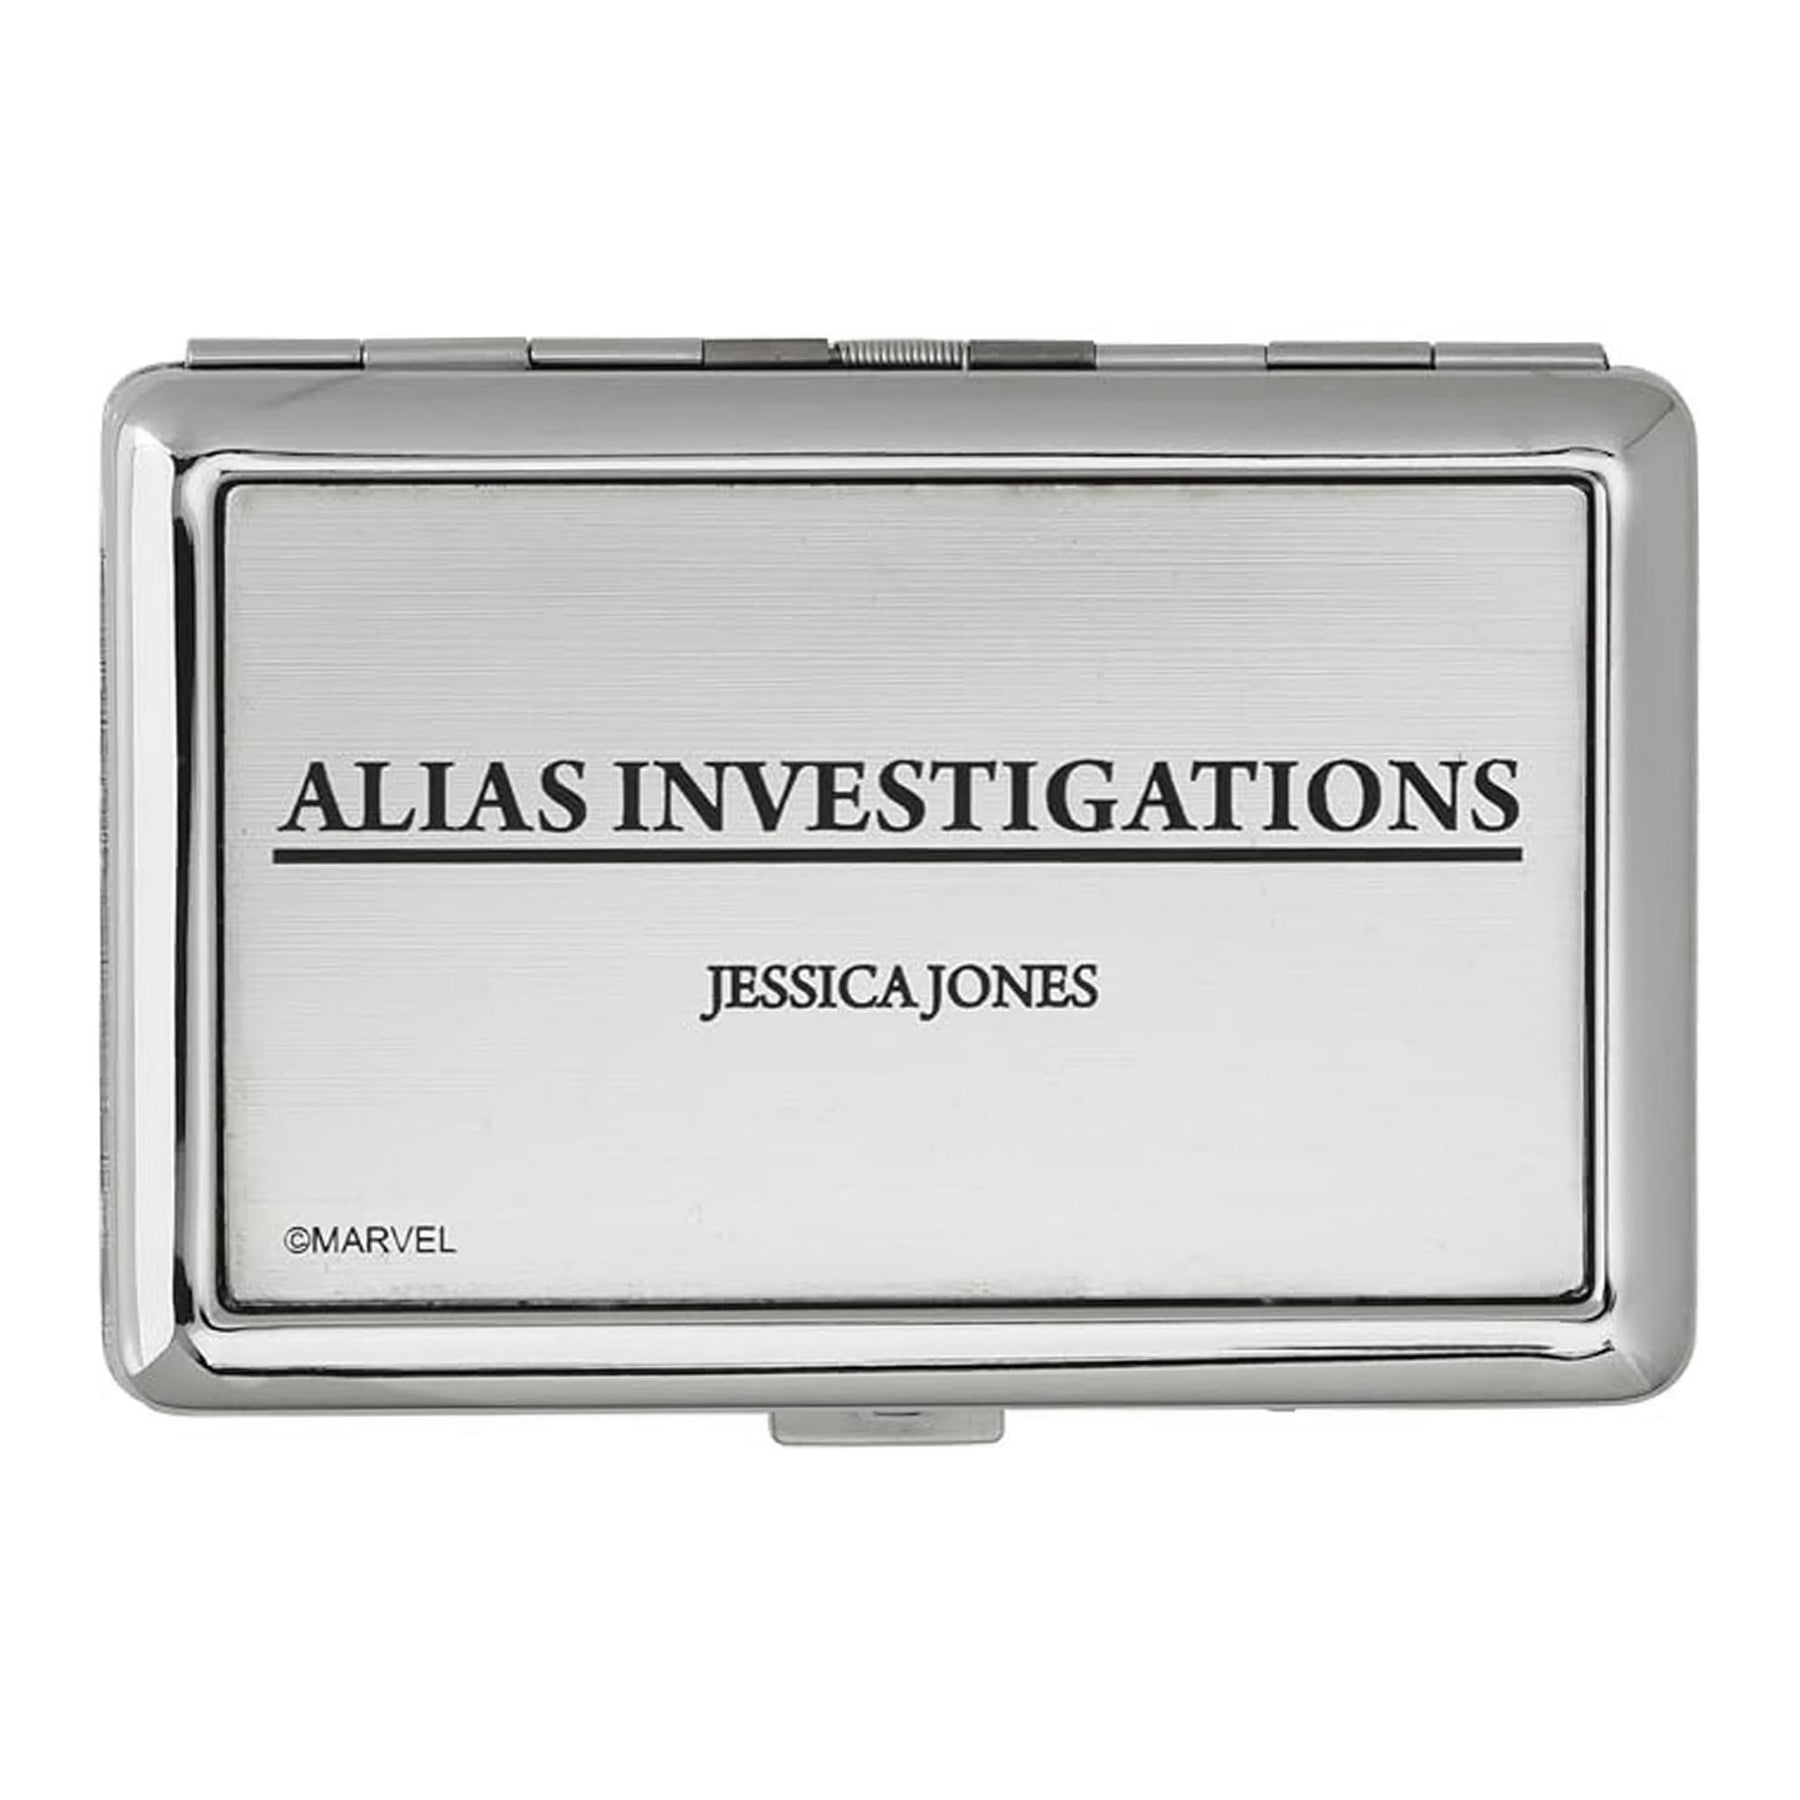 Marvel Jessica Jones "Alias Investigations" Business Card Holder